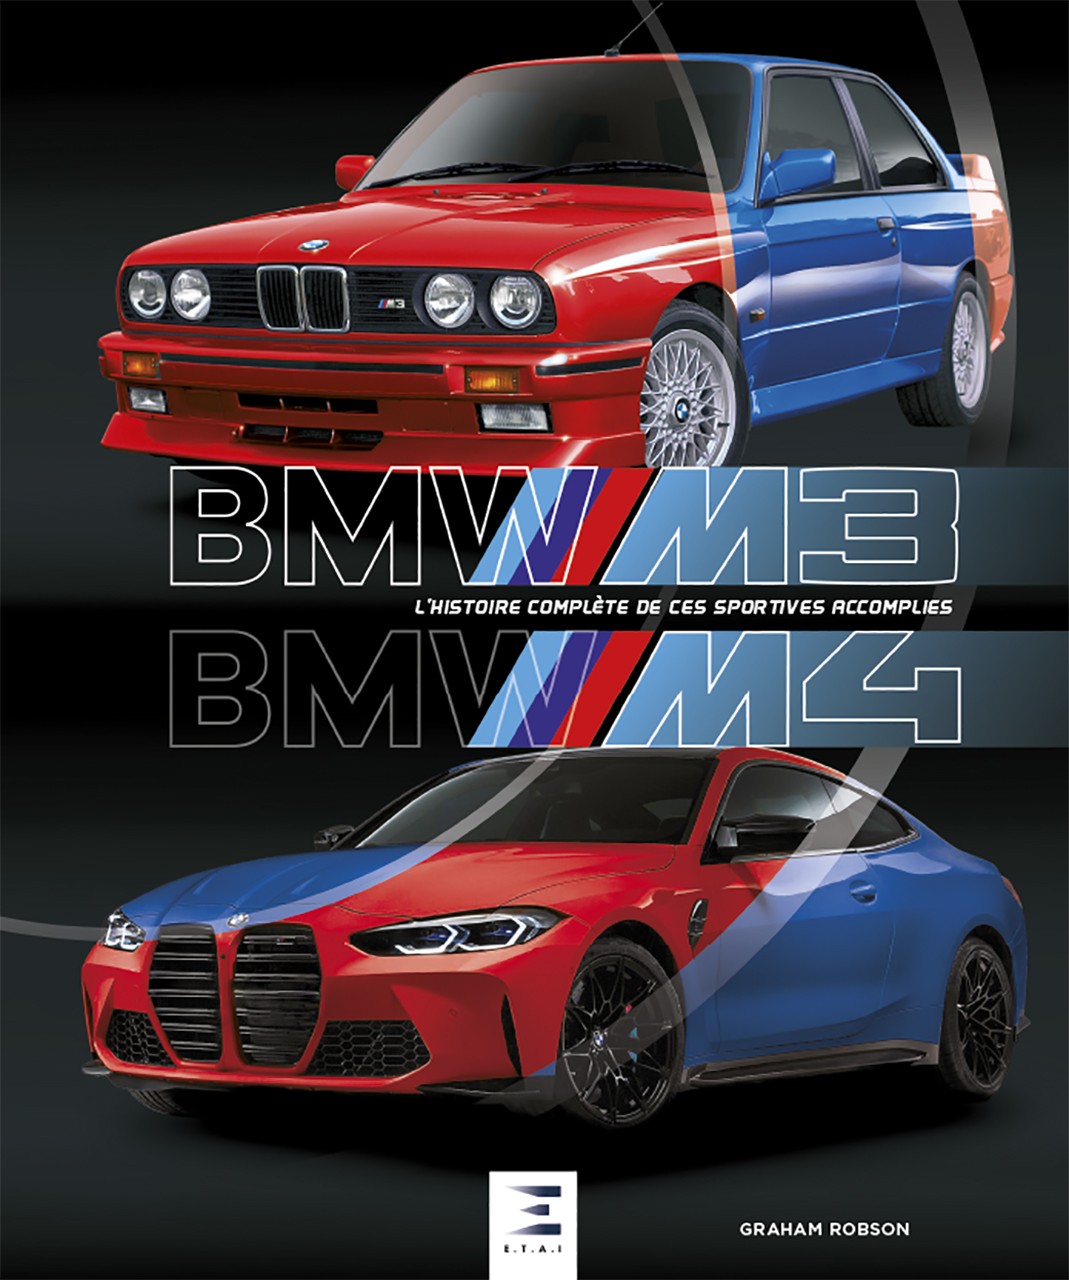 BMW M3/M4